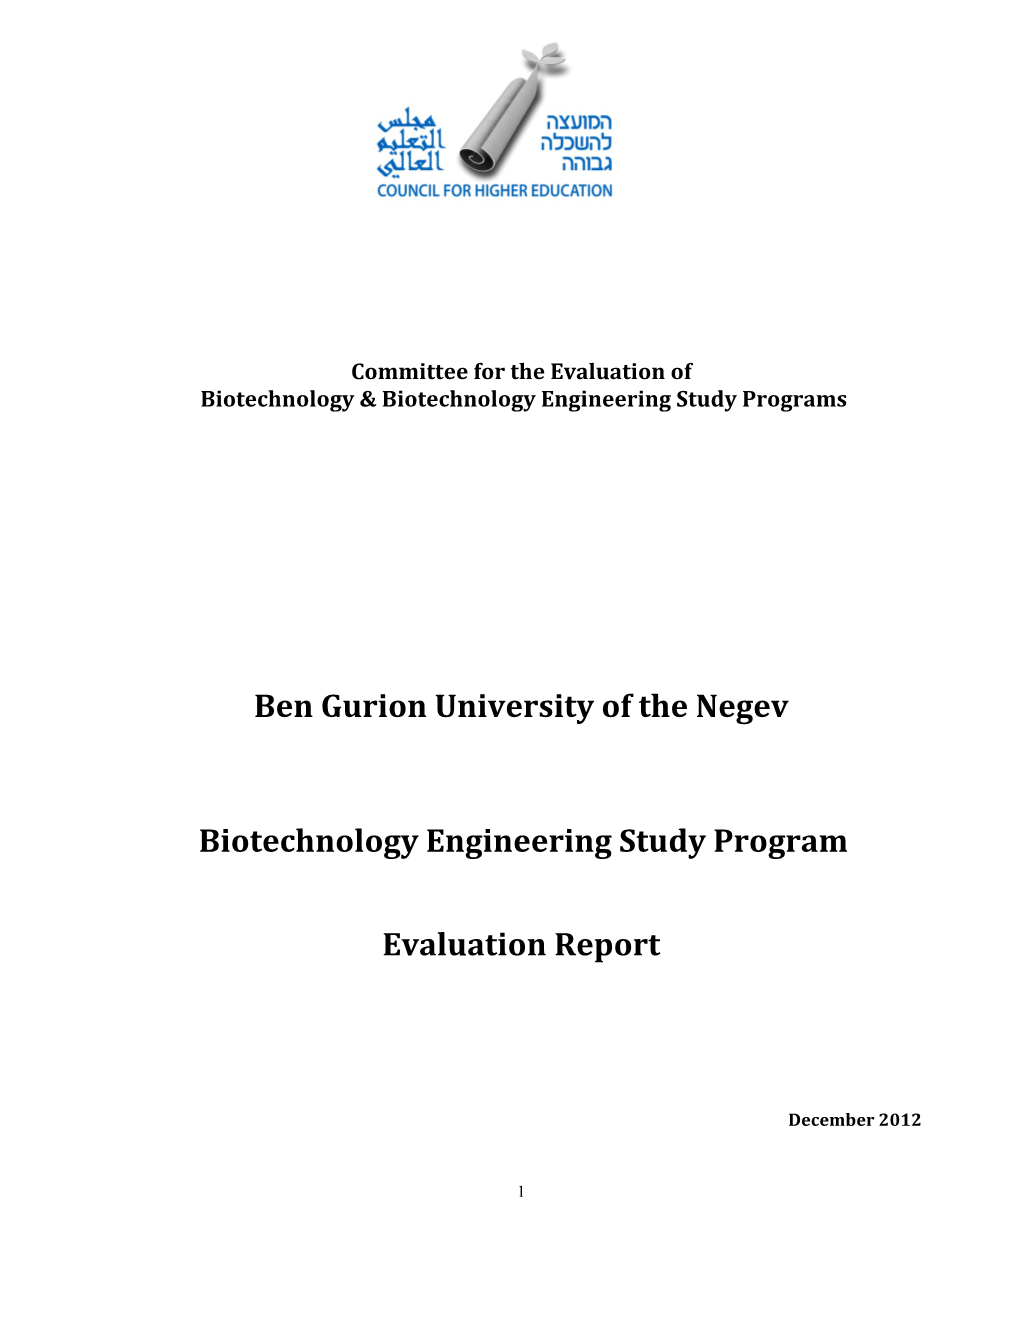 Ben Gurion University of the Negev Biotechnology Engineering Study